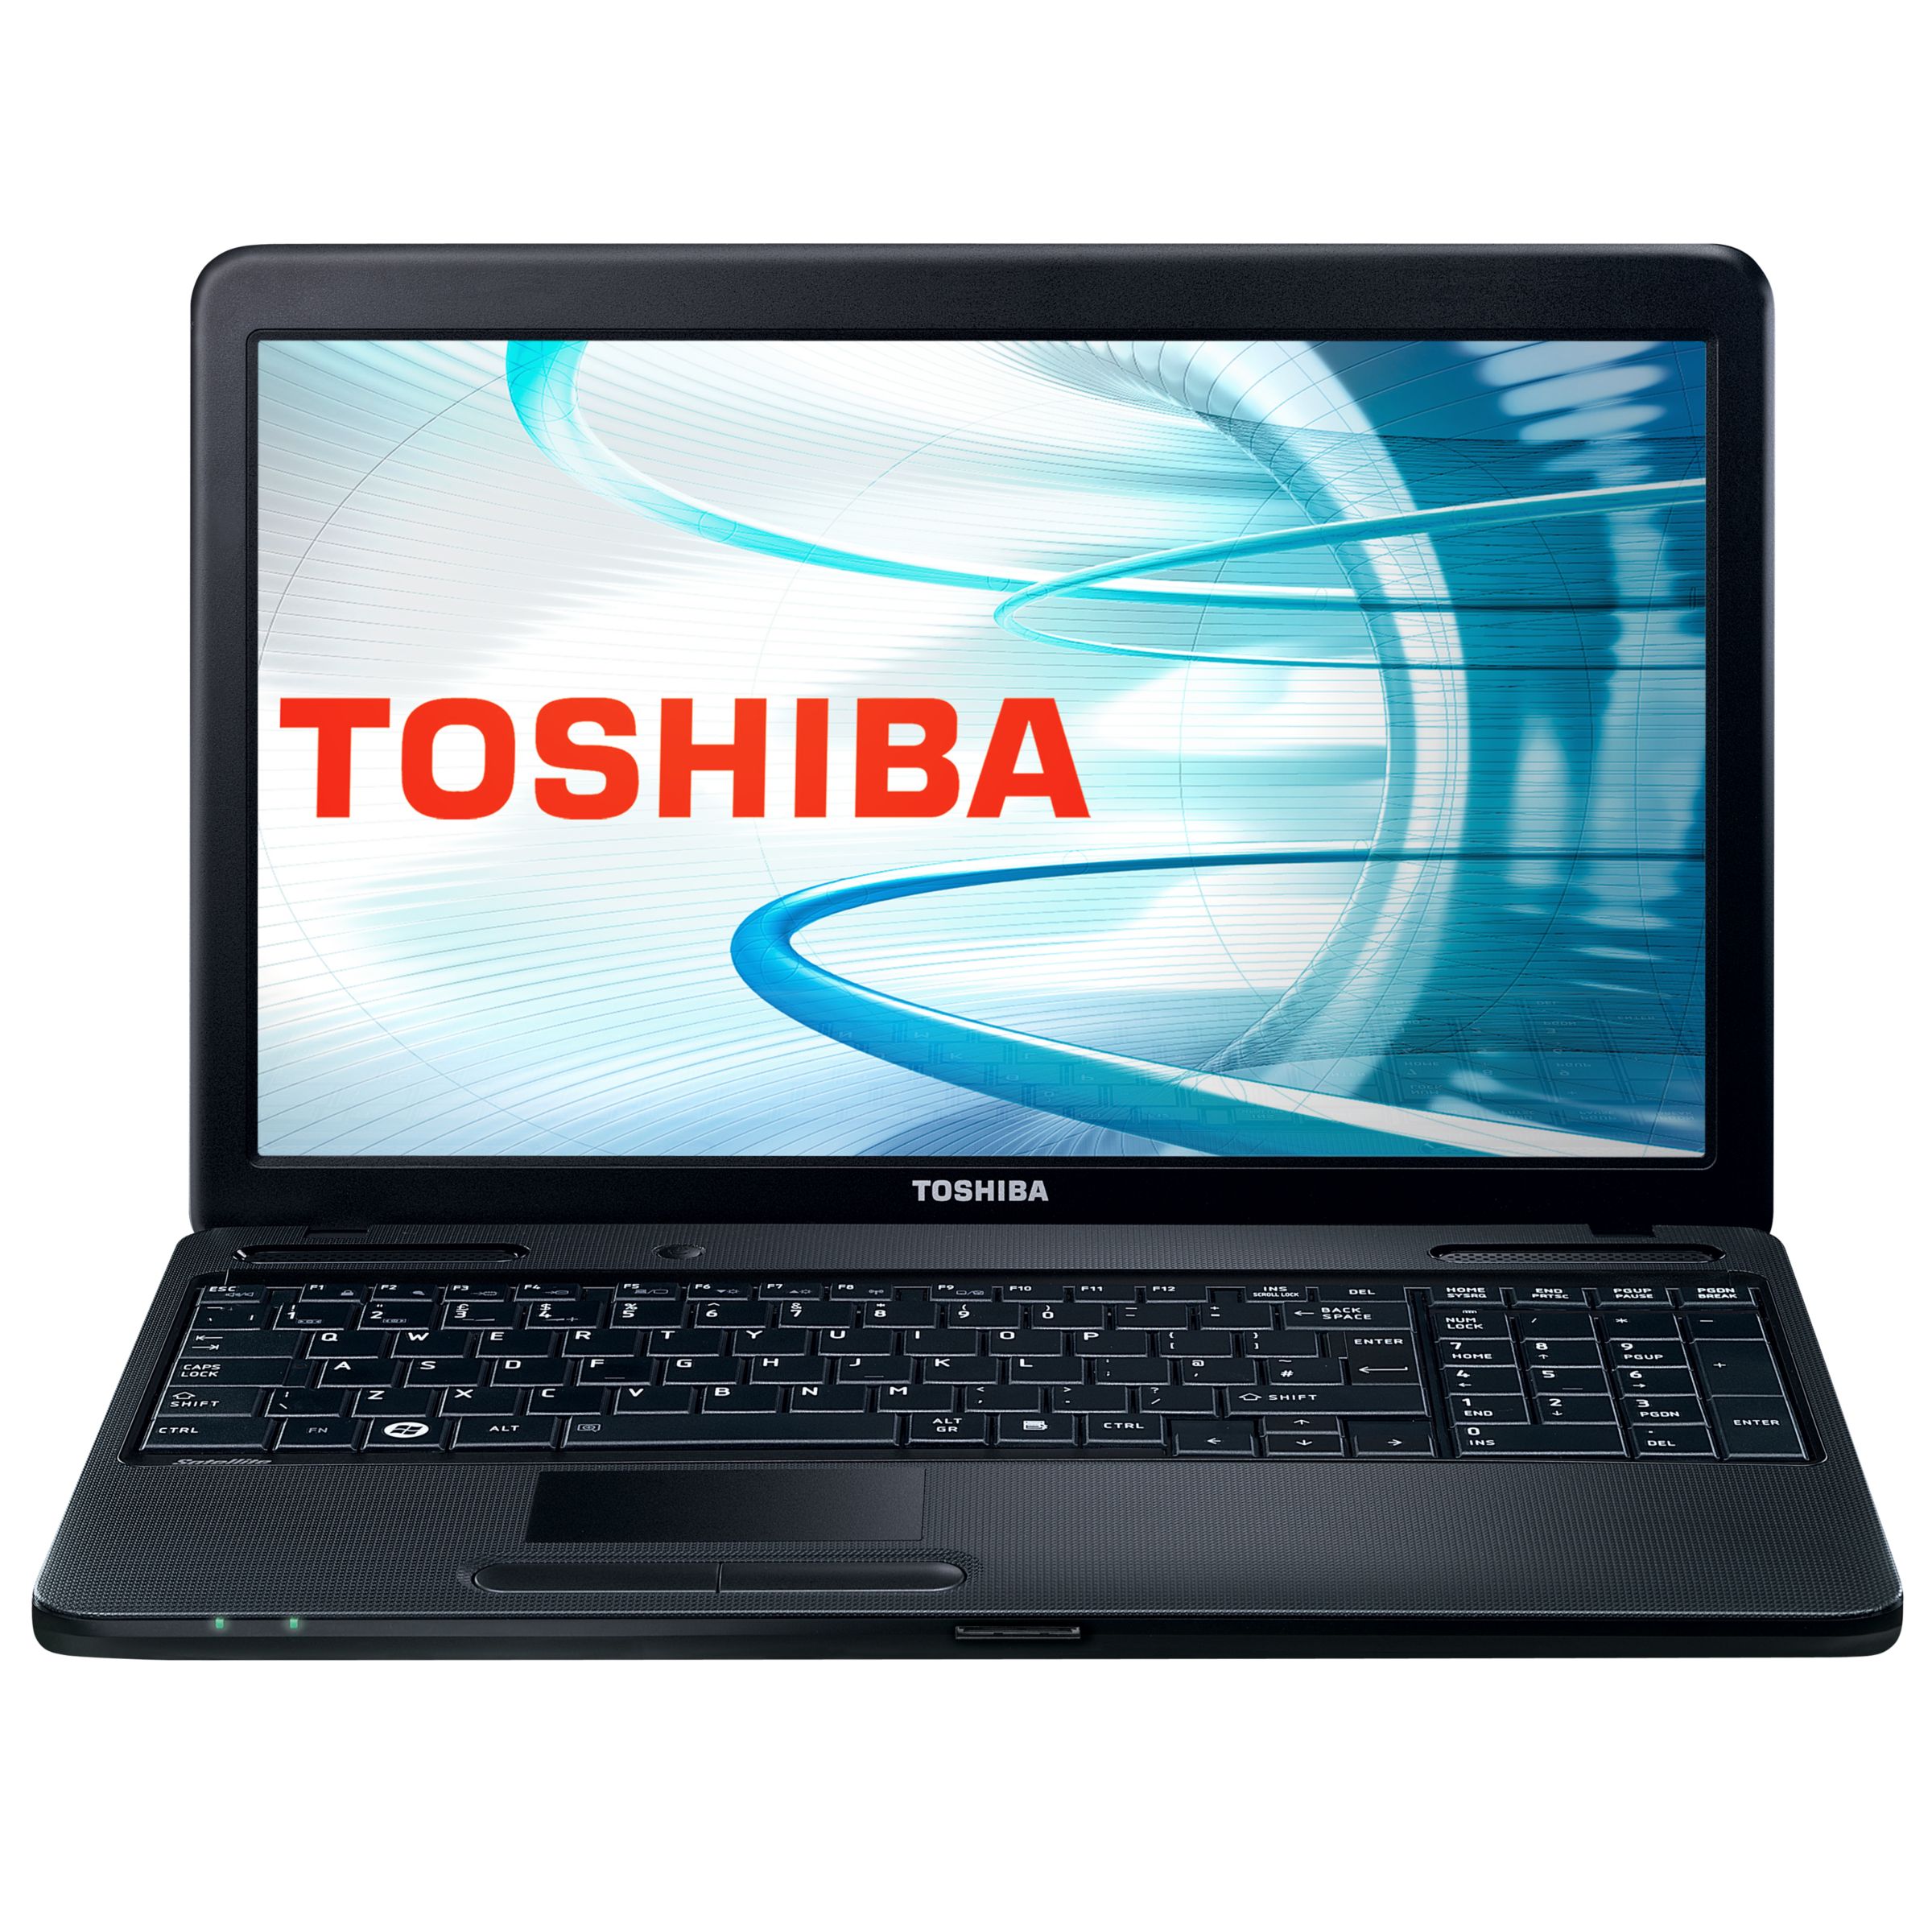 Toshiba Satellite C660D-10W Laptop, AMD Sempron, 250GB, 2.3GHz, 2GB RAM with 15.6 Inch Display at John Lewis